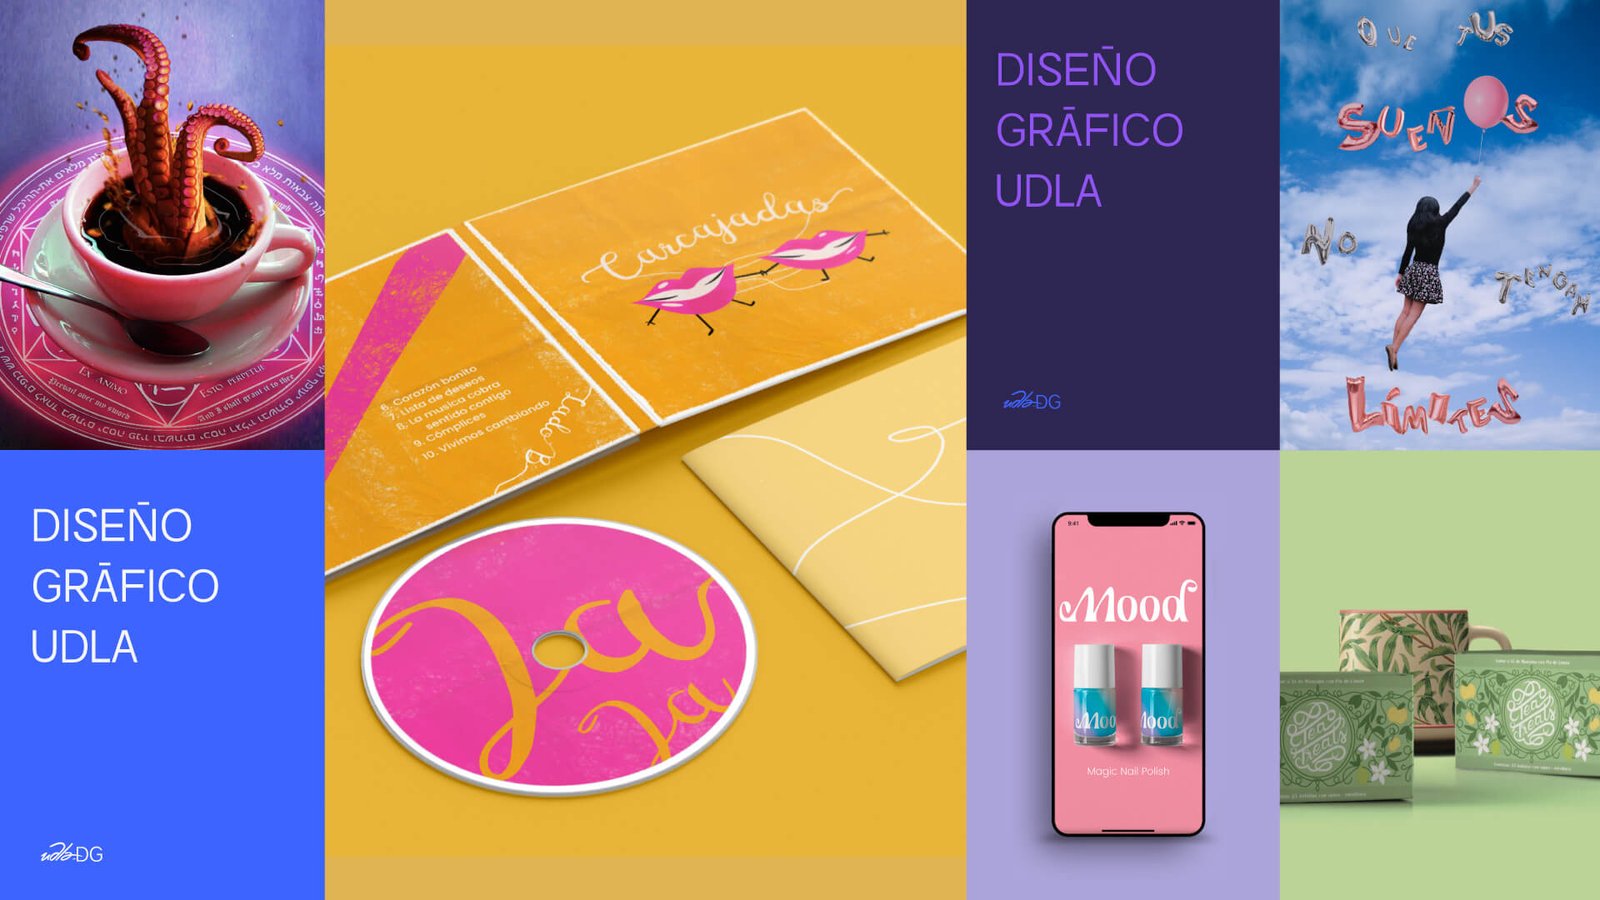 udla-diseno-BRAND-12